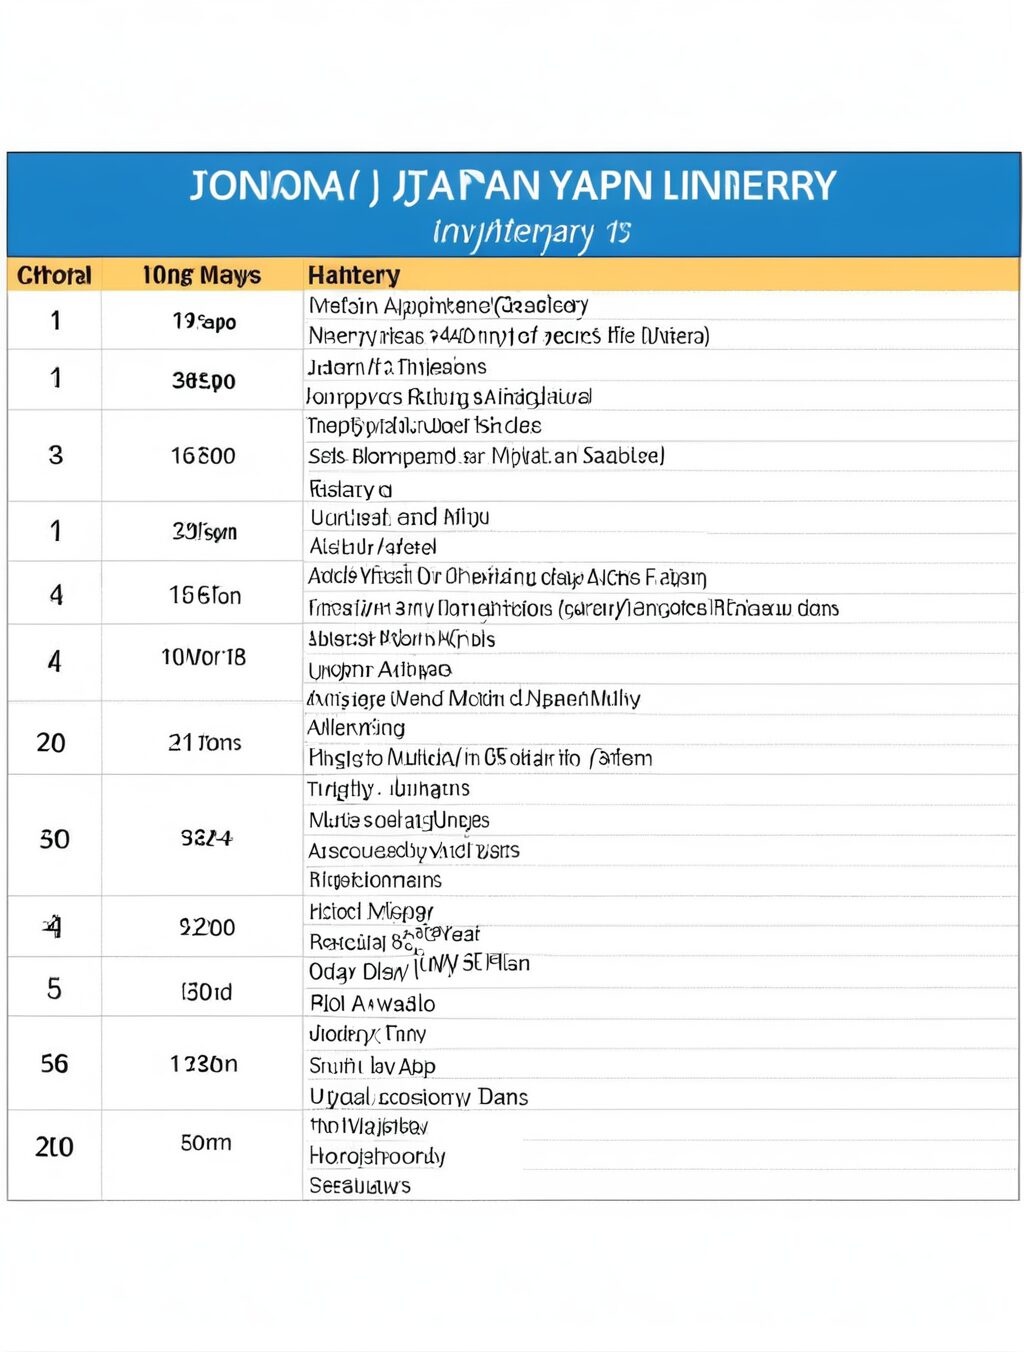 japan itinerary 4 days